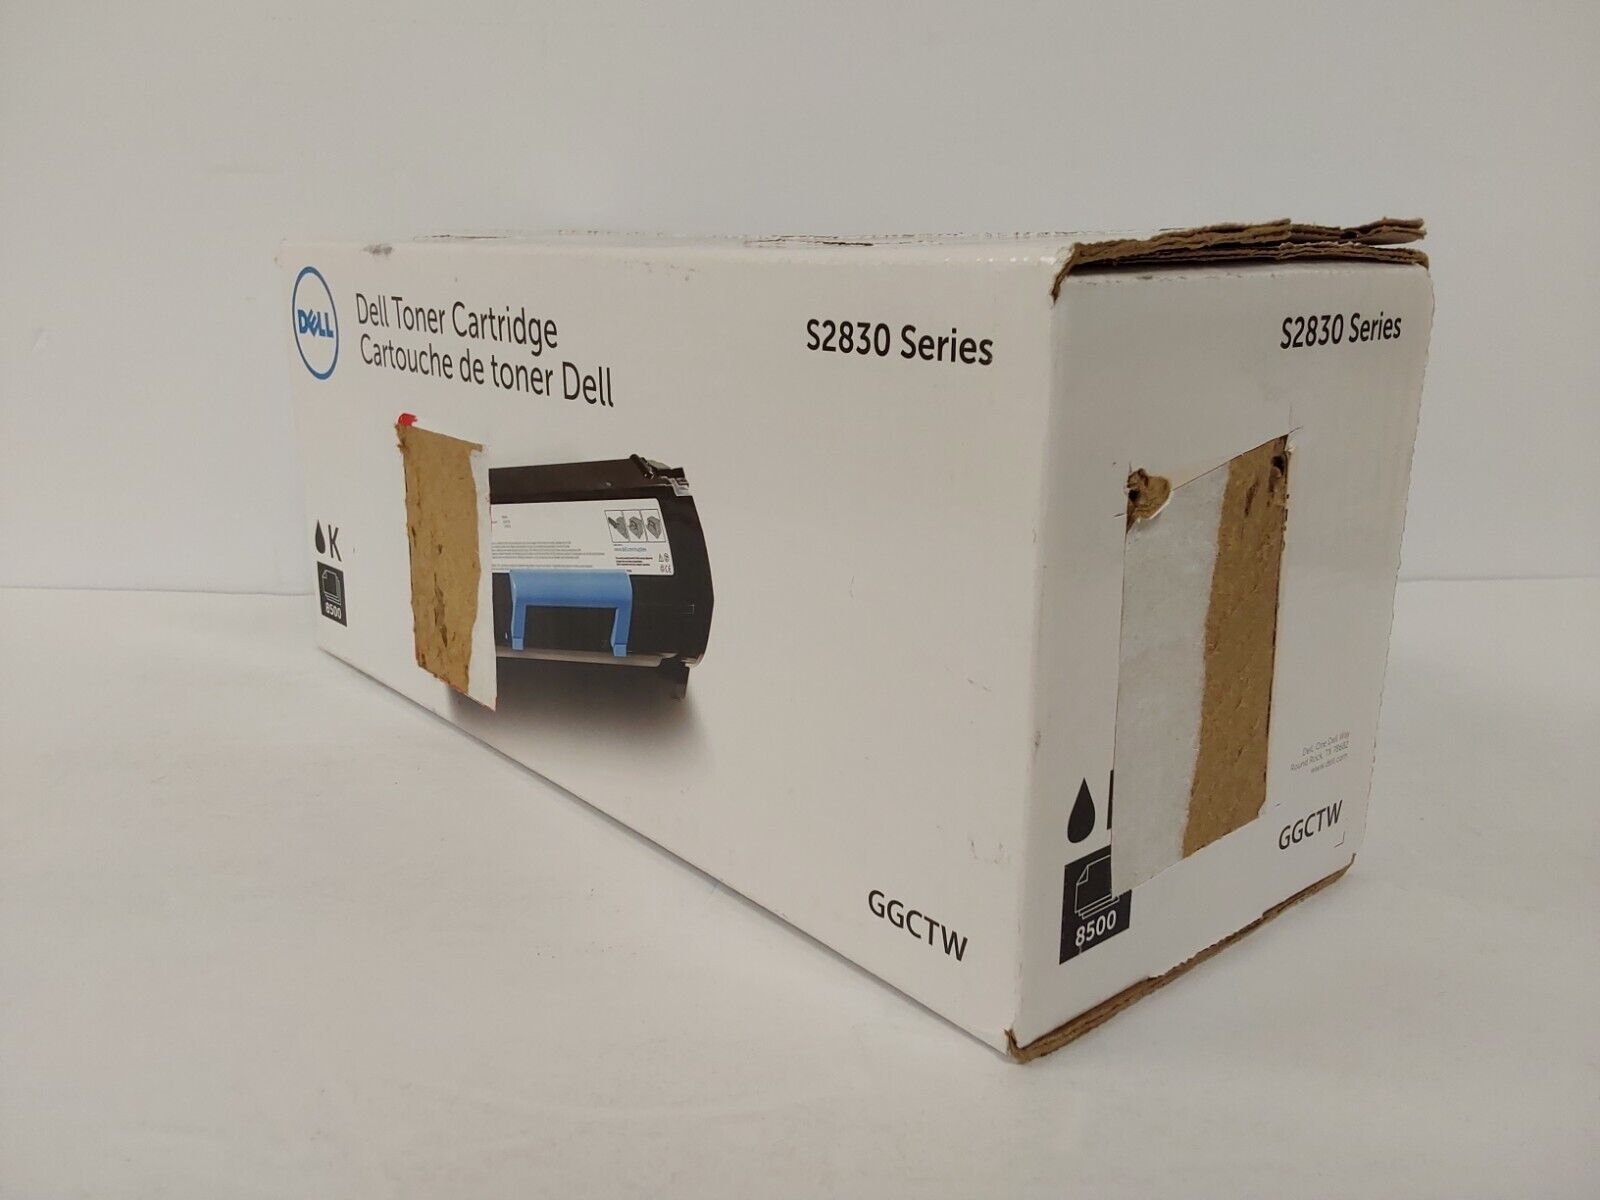 Genuine Dell GGCTW Black Toner Cartridge S2830 Series - Sealed Box